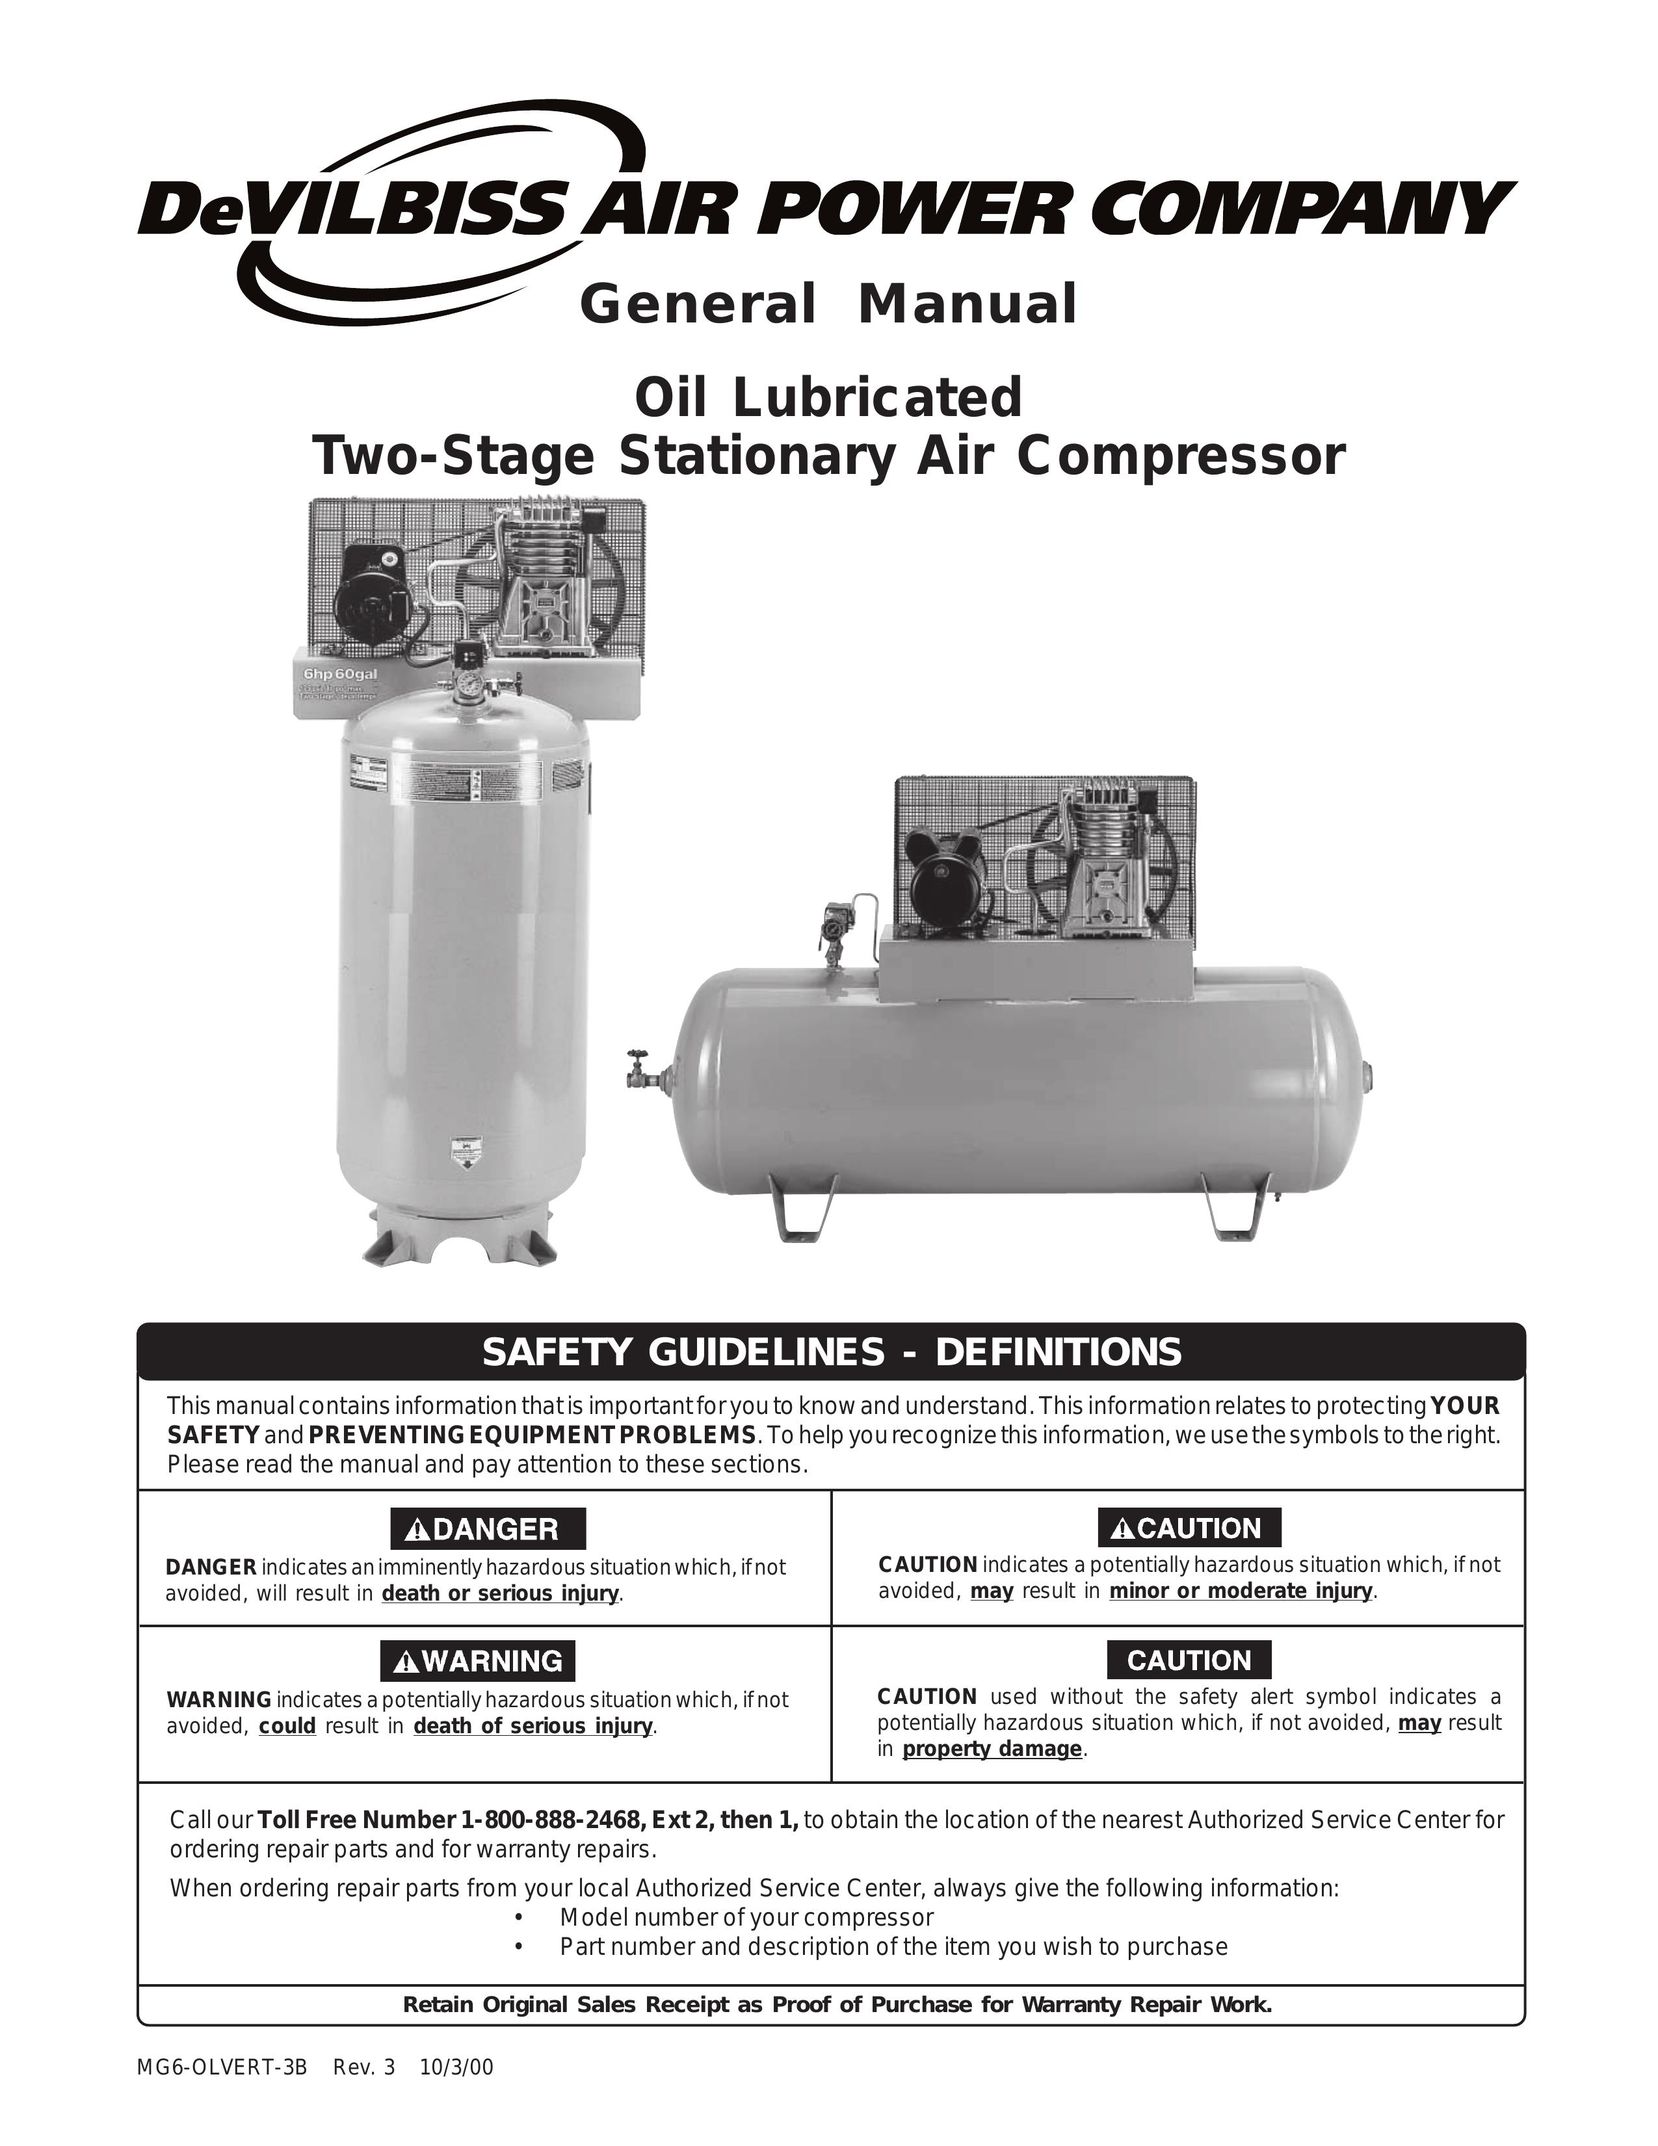 DeVillbiss Air Power Company 12MG6-OLVERT-3B Air Compressor User Manual